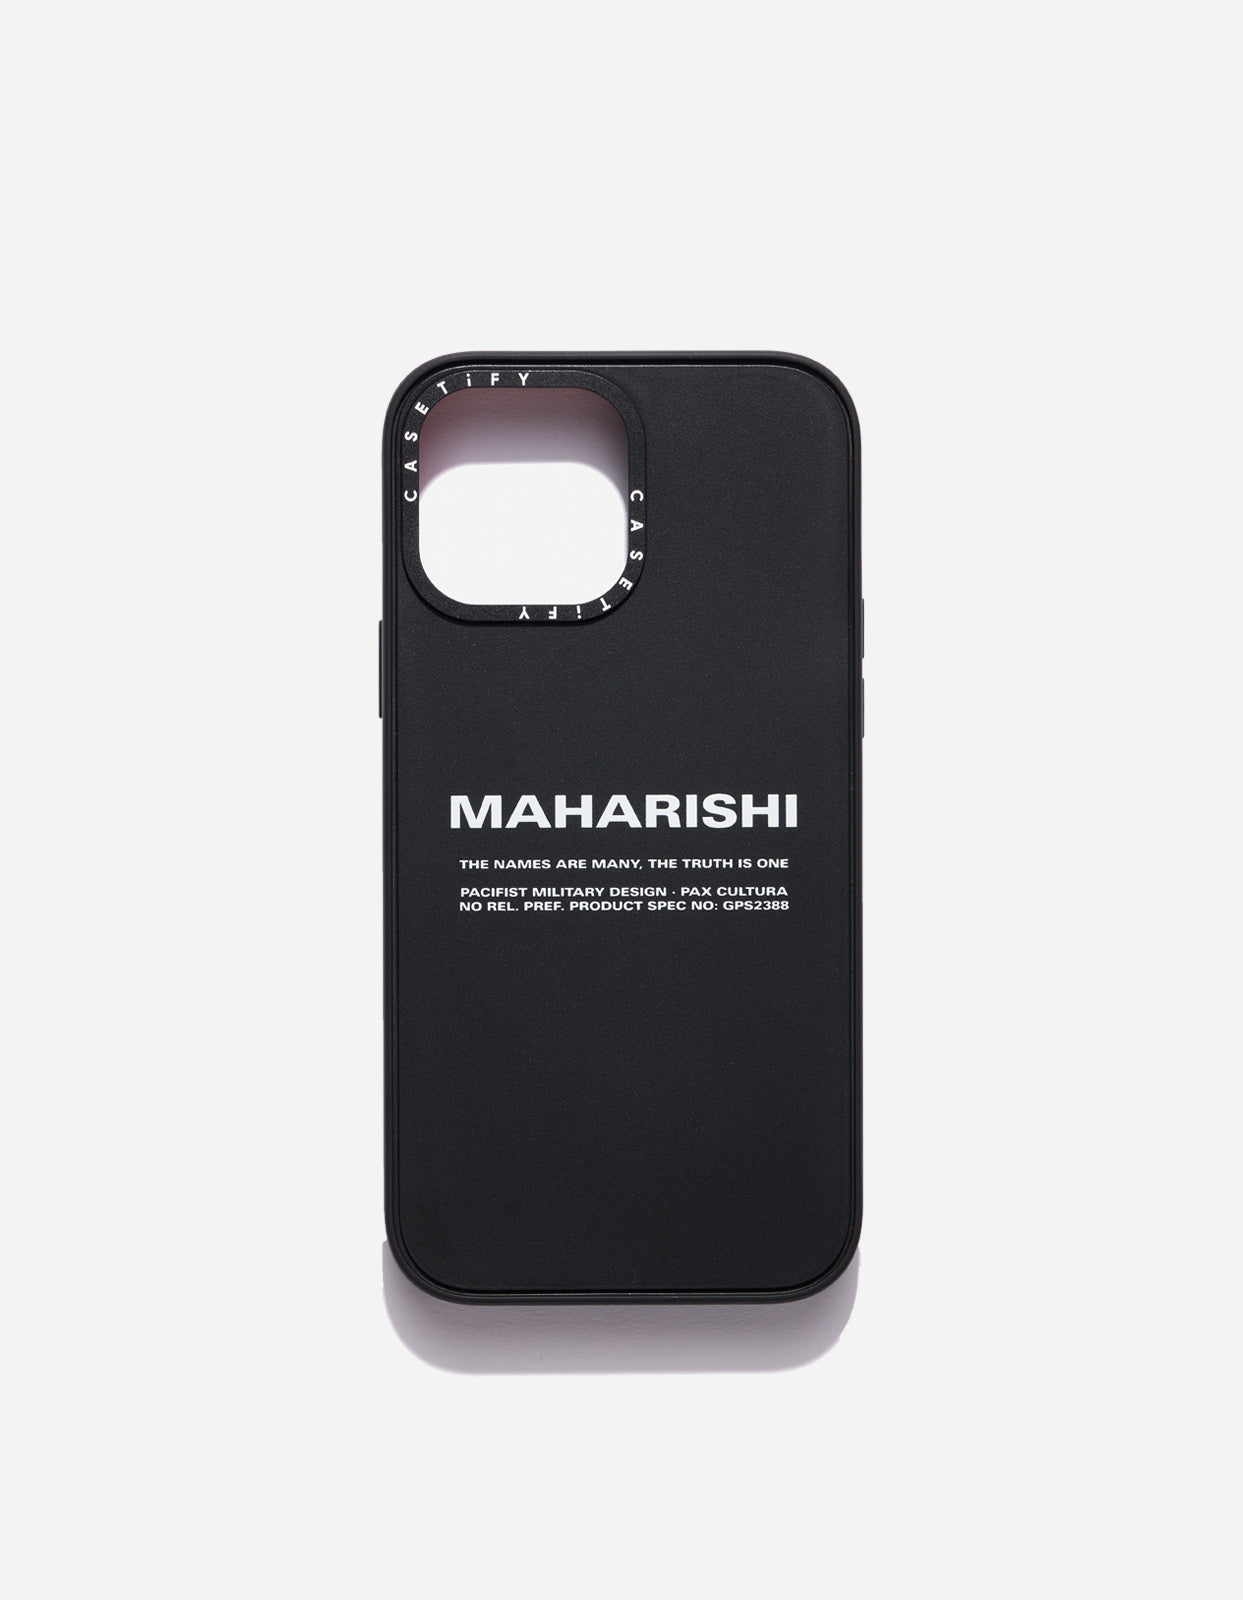 Maharishi x CASETiFY iPhone Case Black